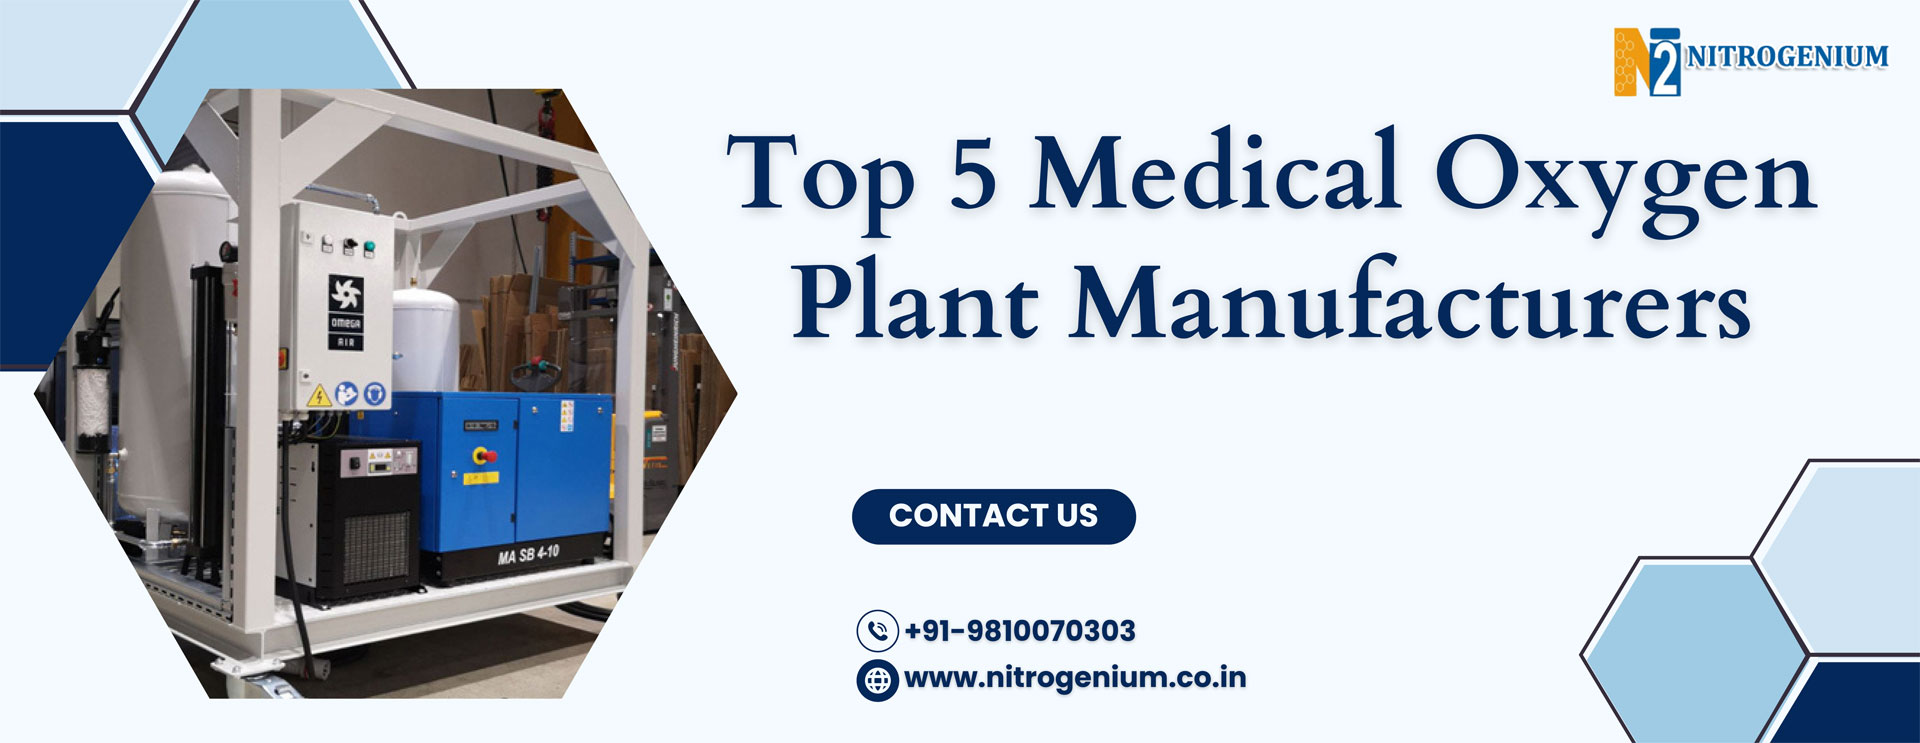 Top 5 Medical Oxygen Plant Manufacturers